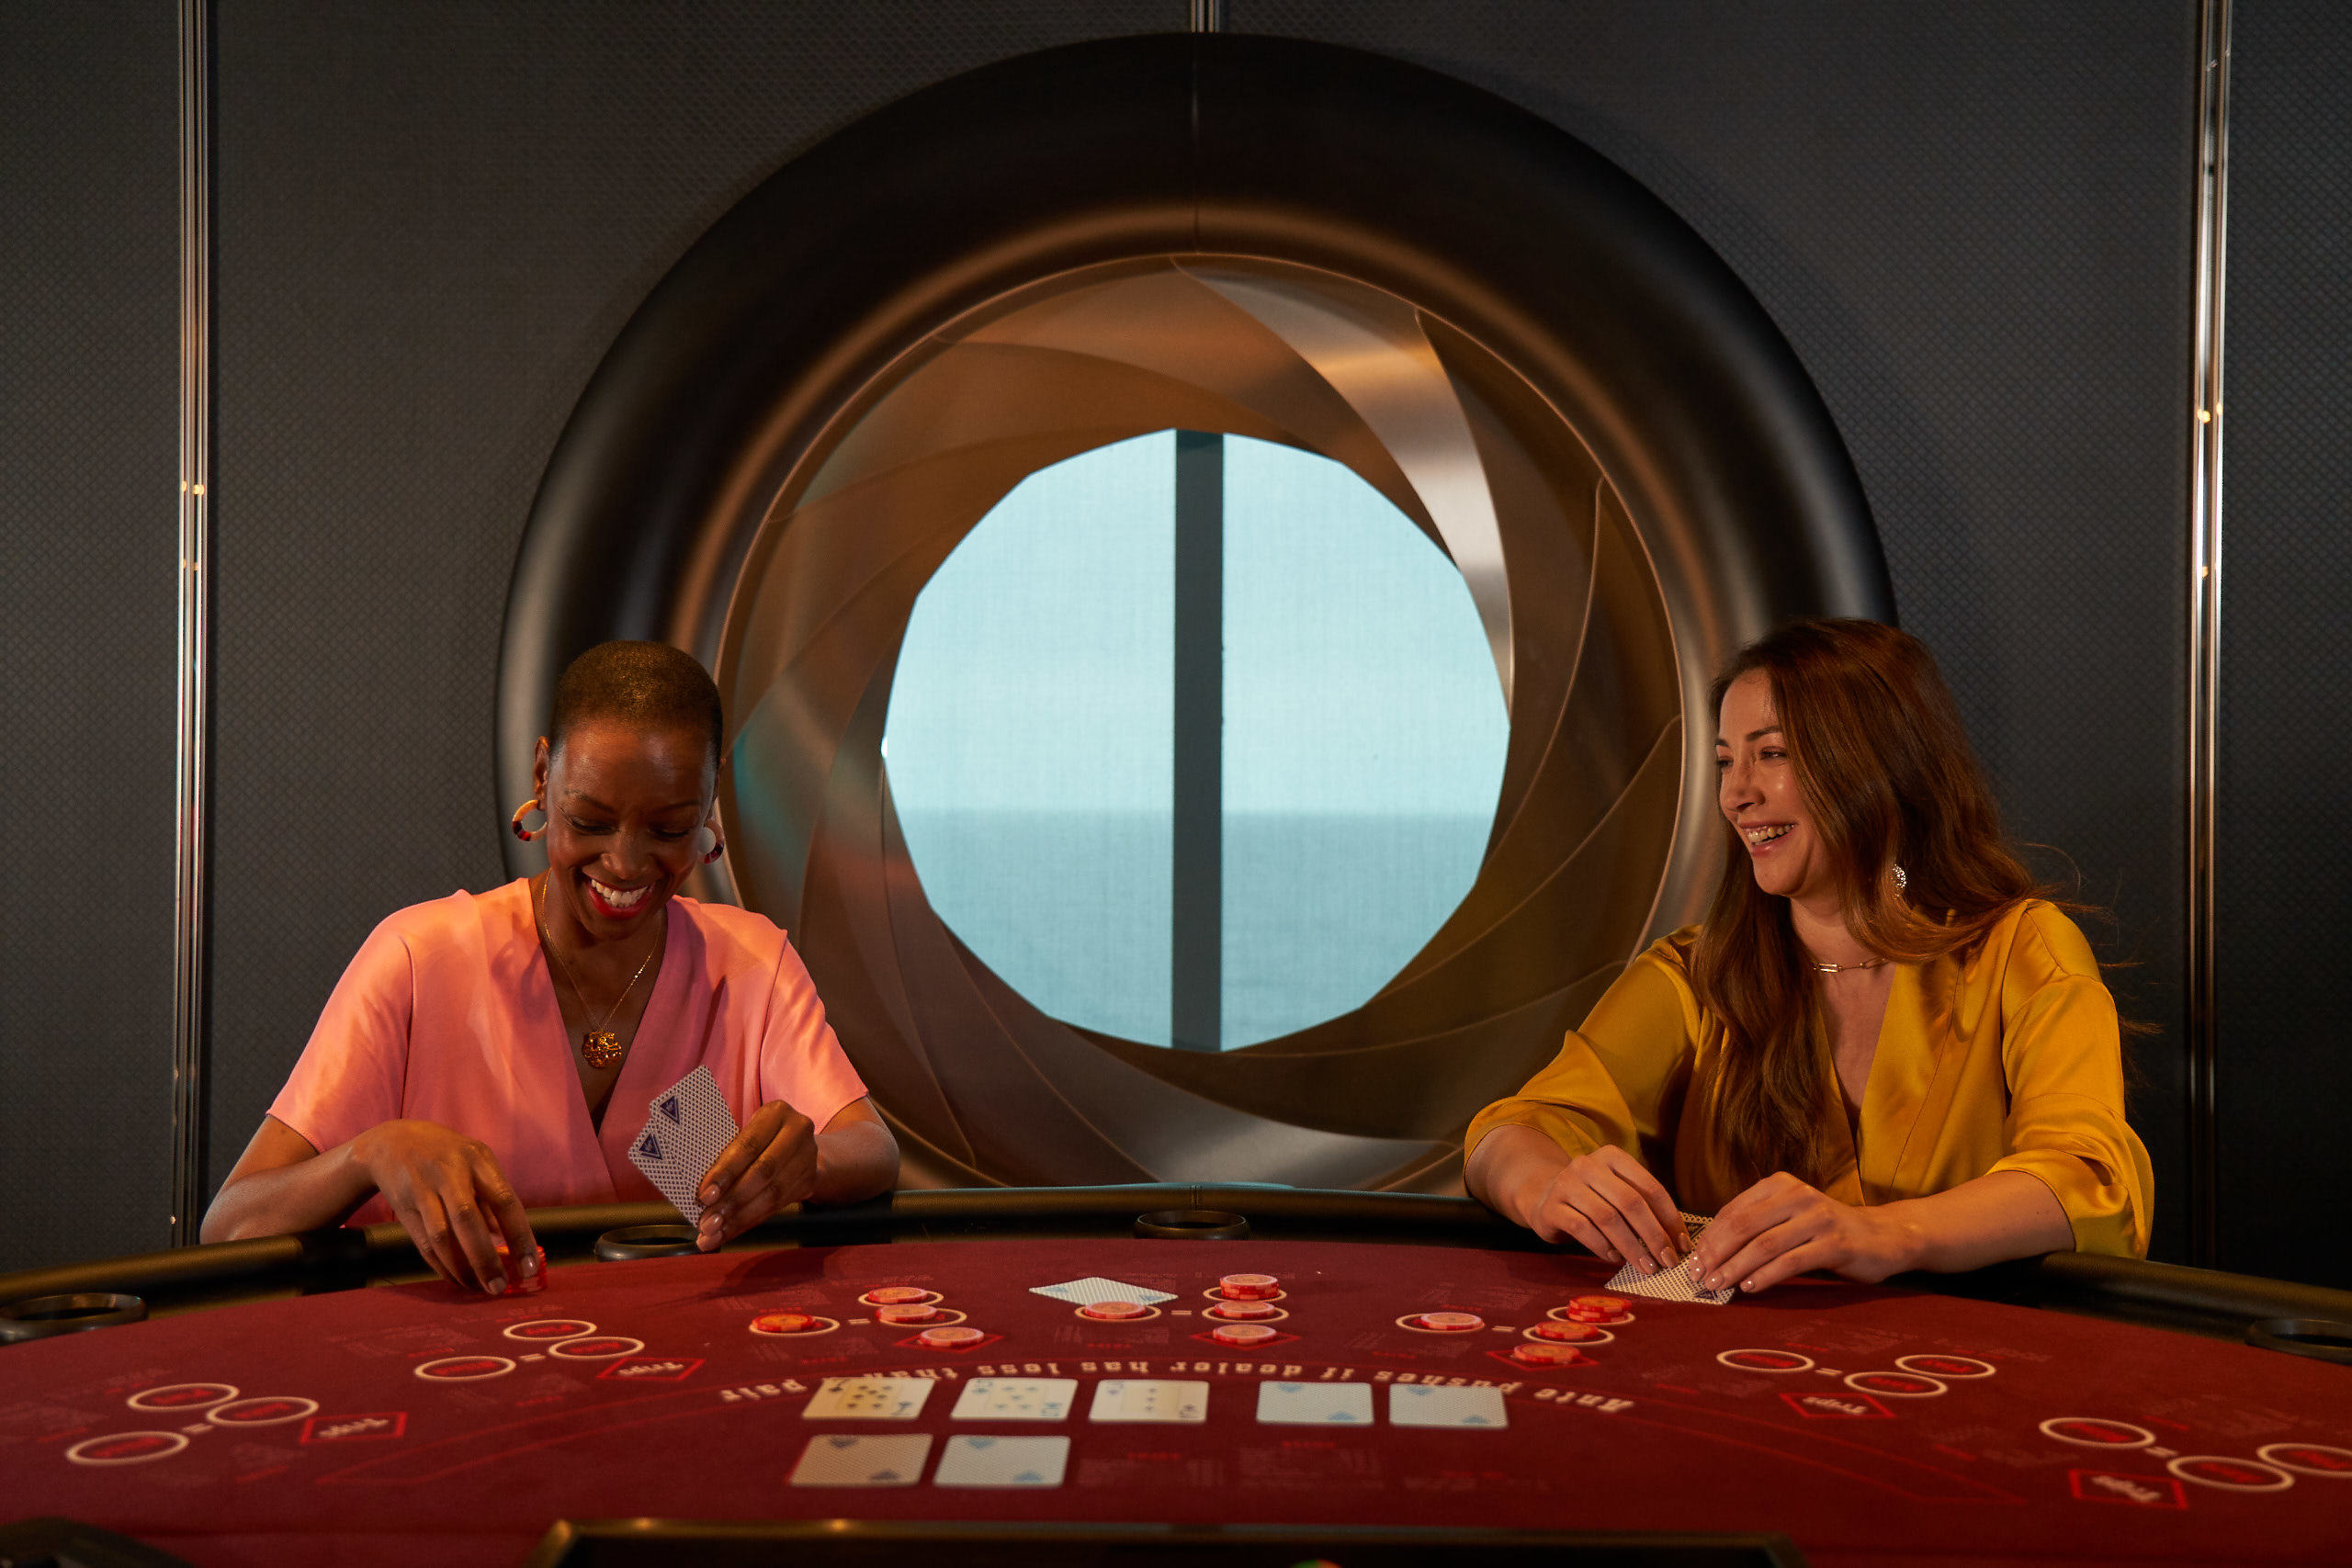 the casino Image